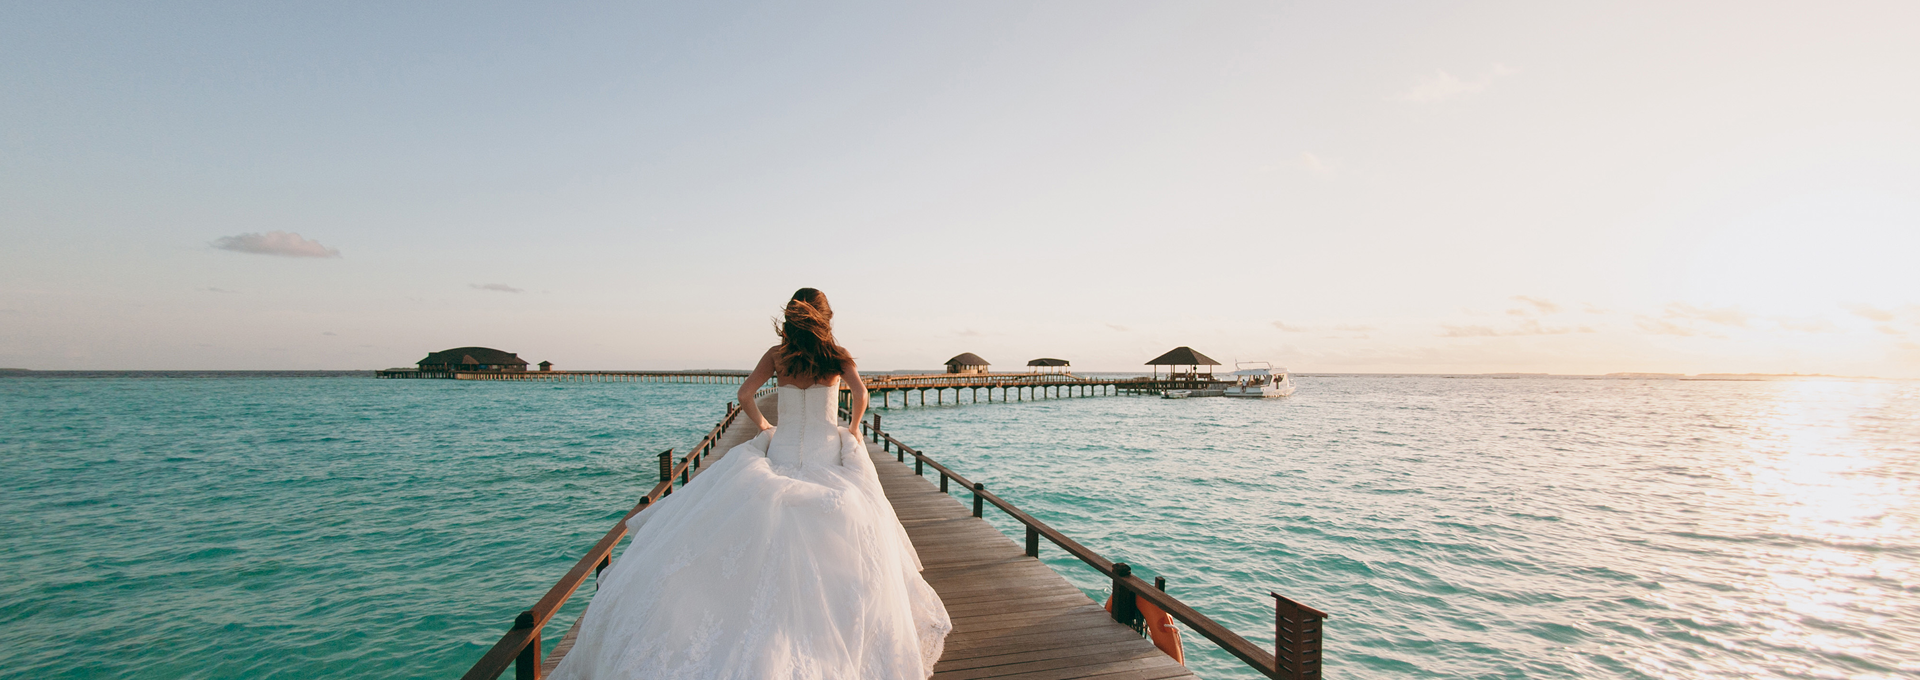 Destination wedding bride on a pier over water